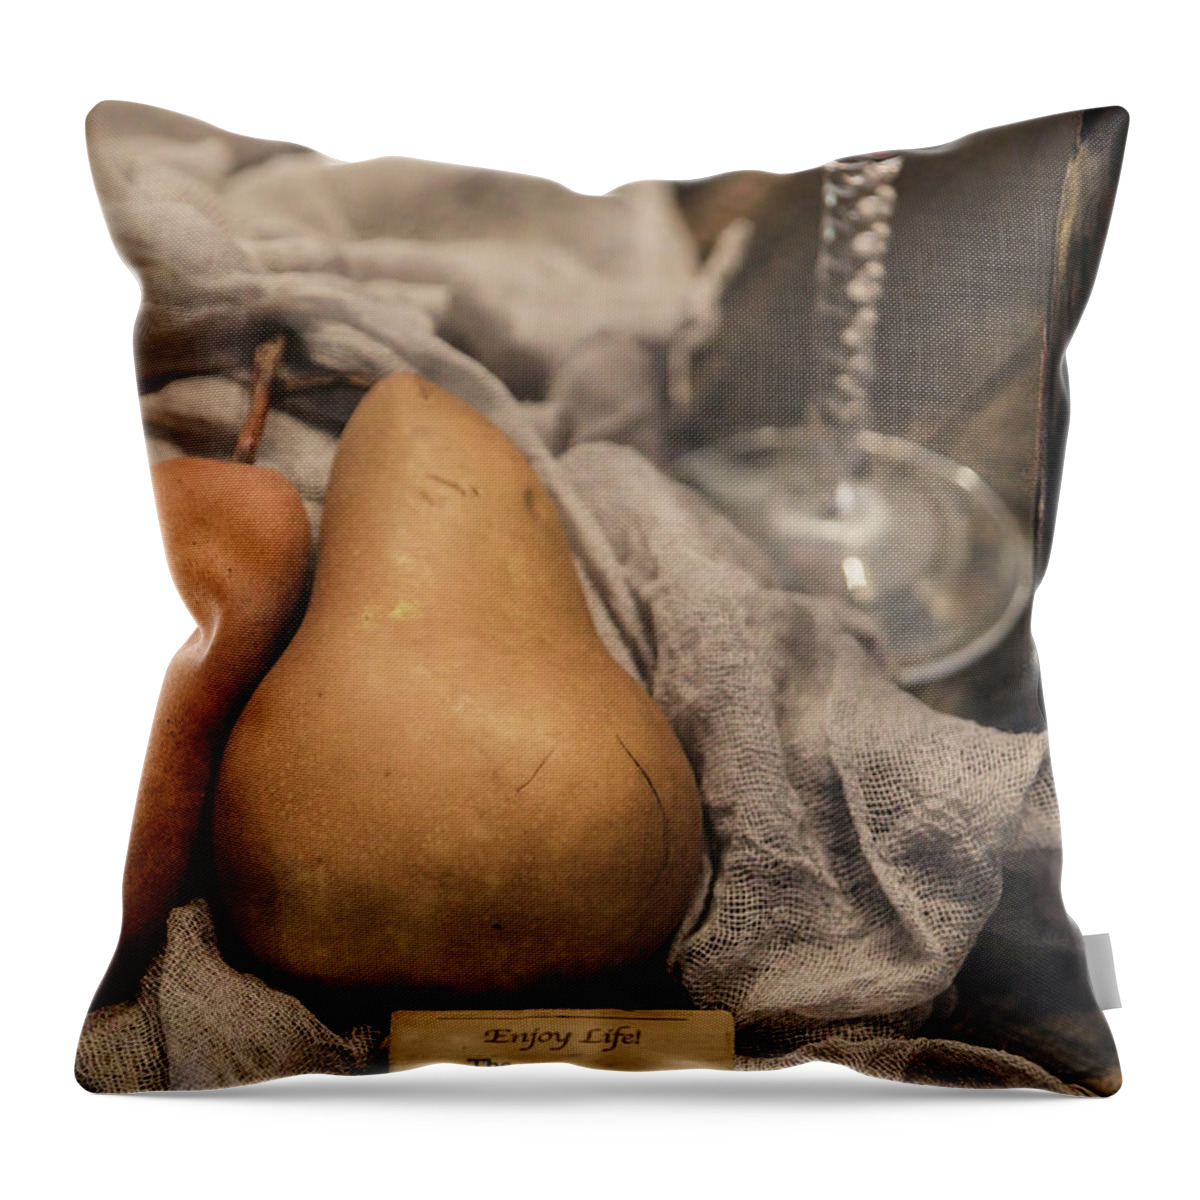 Fruit Throw Pillow featuring the photograph Enjoy Life Vertical by Teresa Wilson